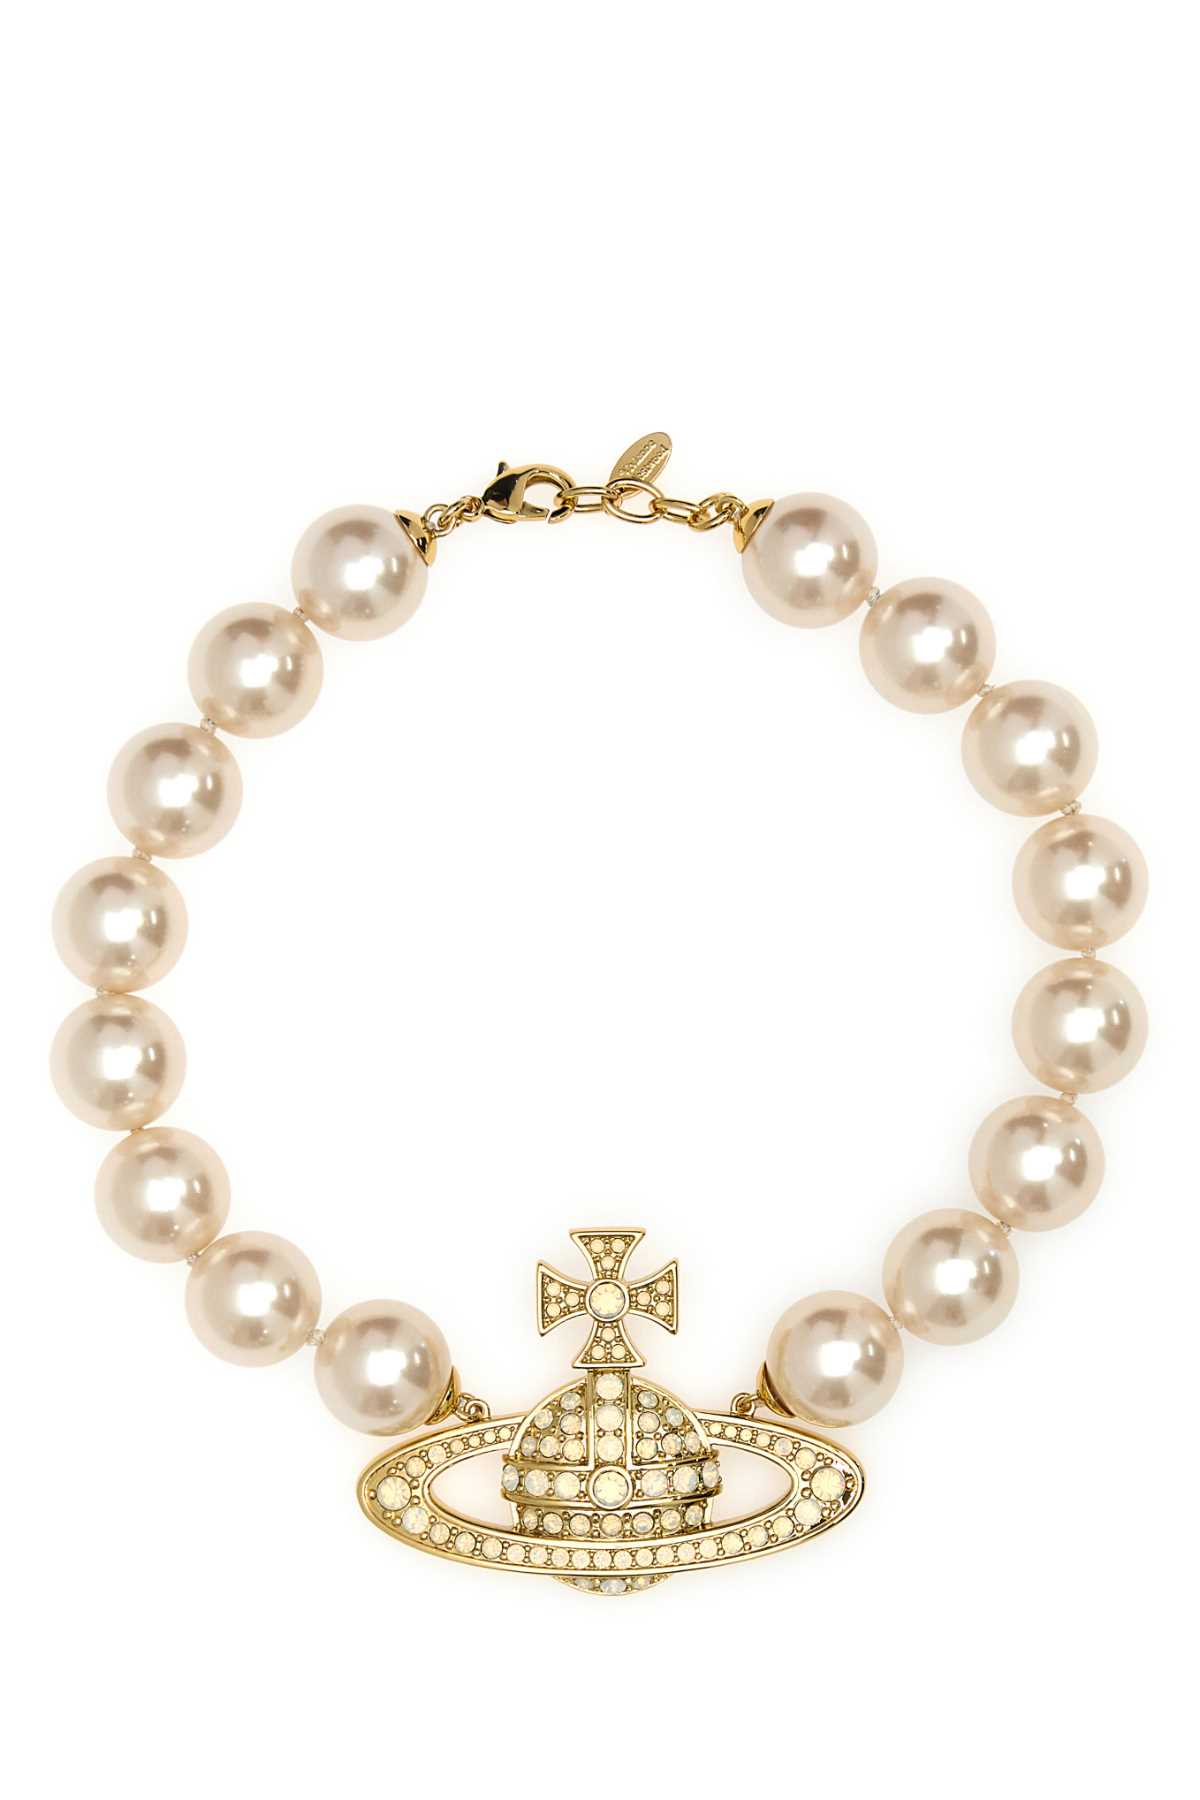 Vivienne Westwood Ivory Pearls Neysa Necklace In R597